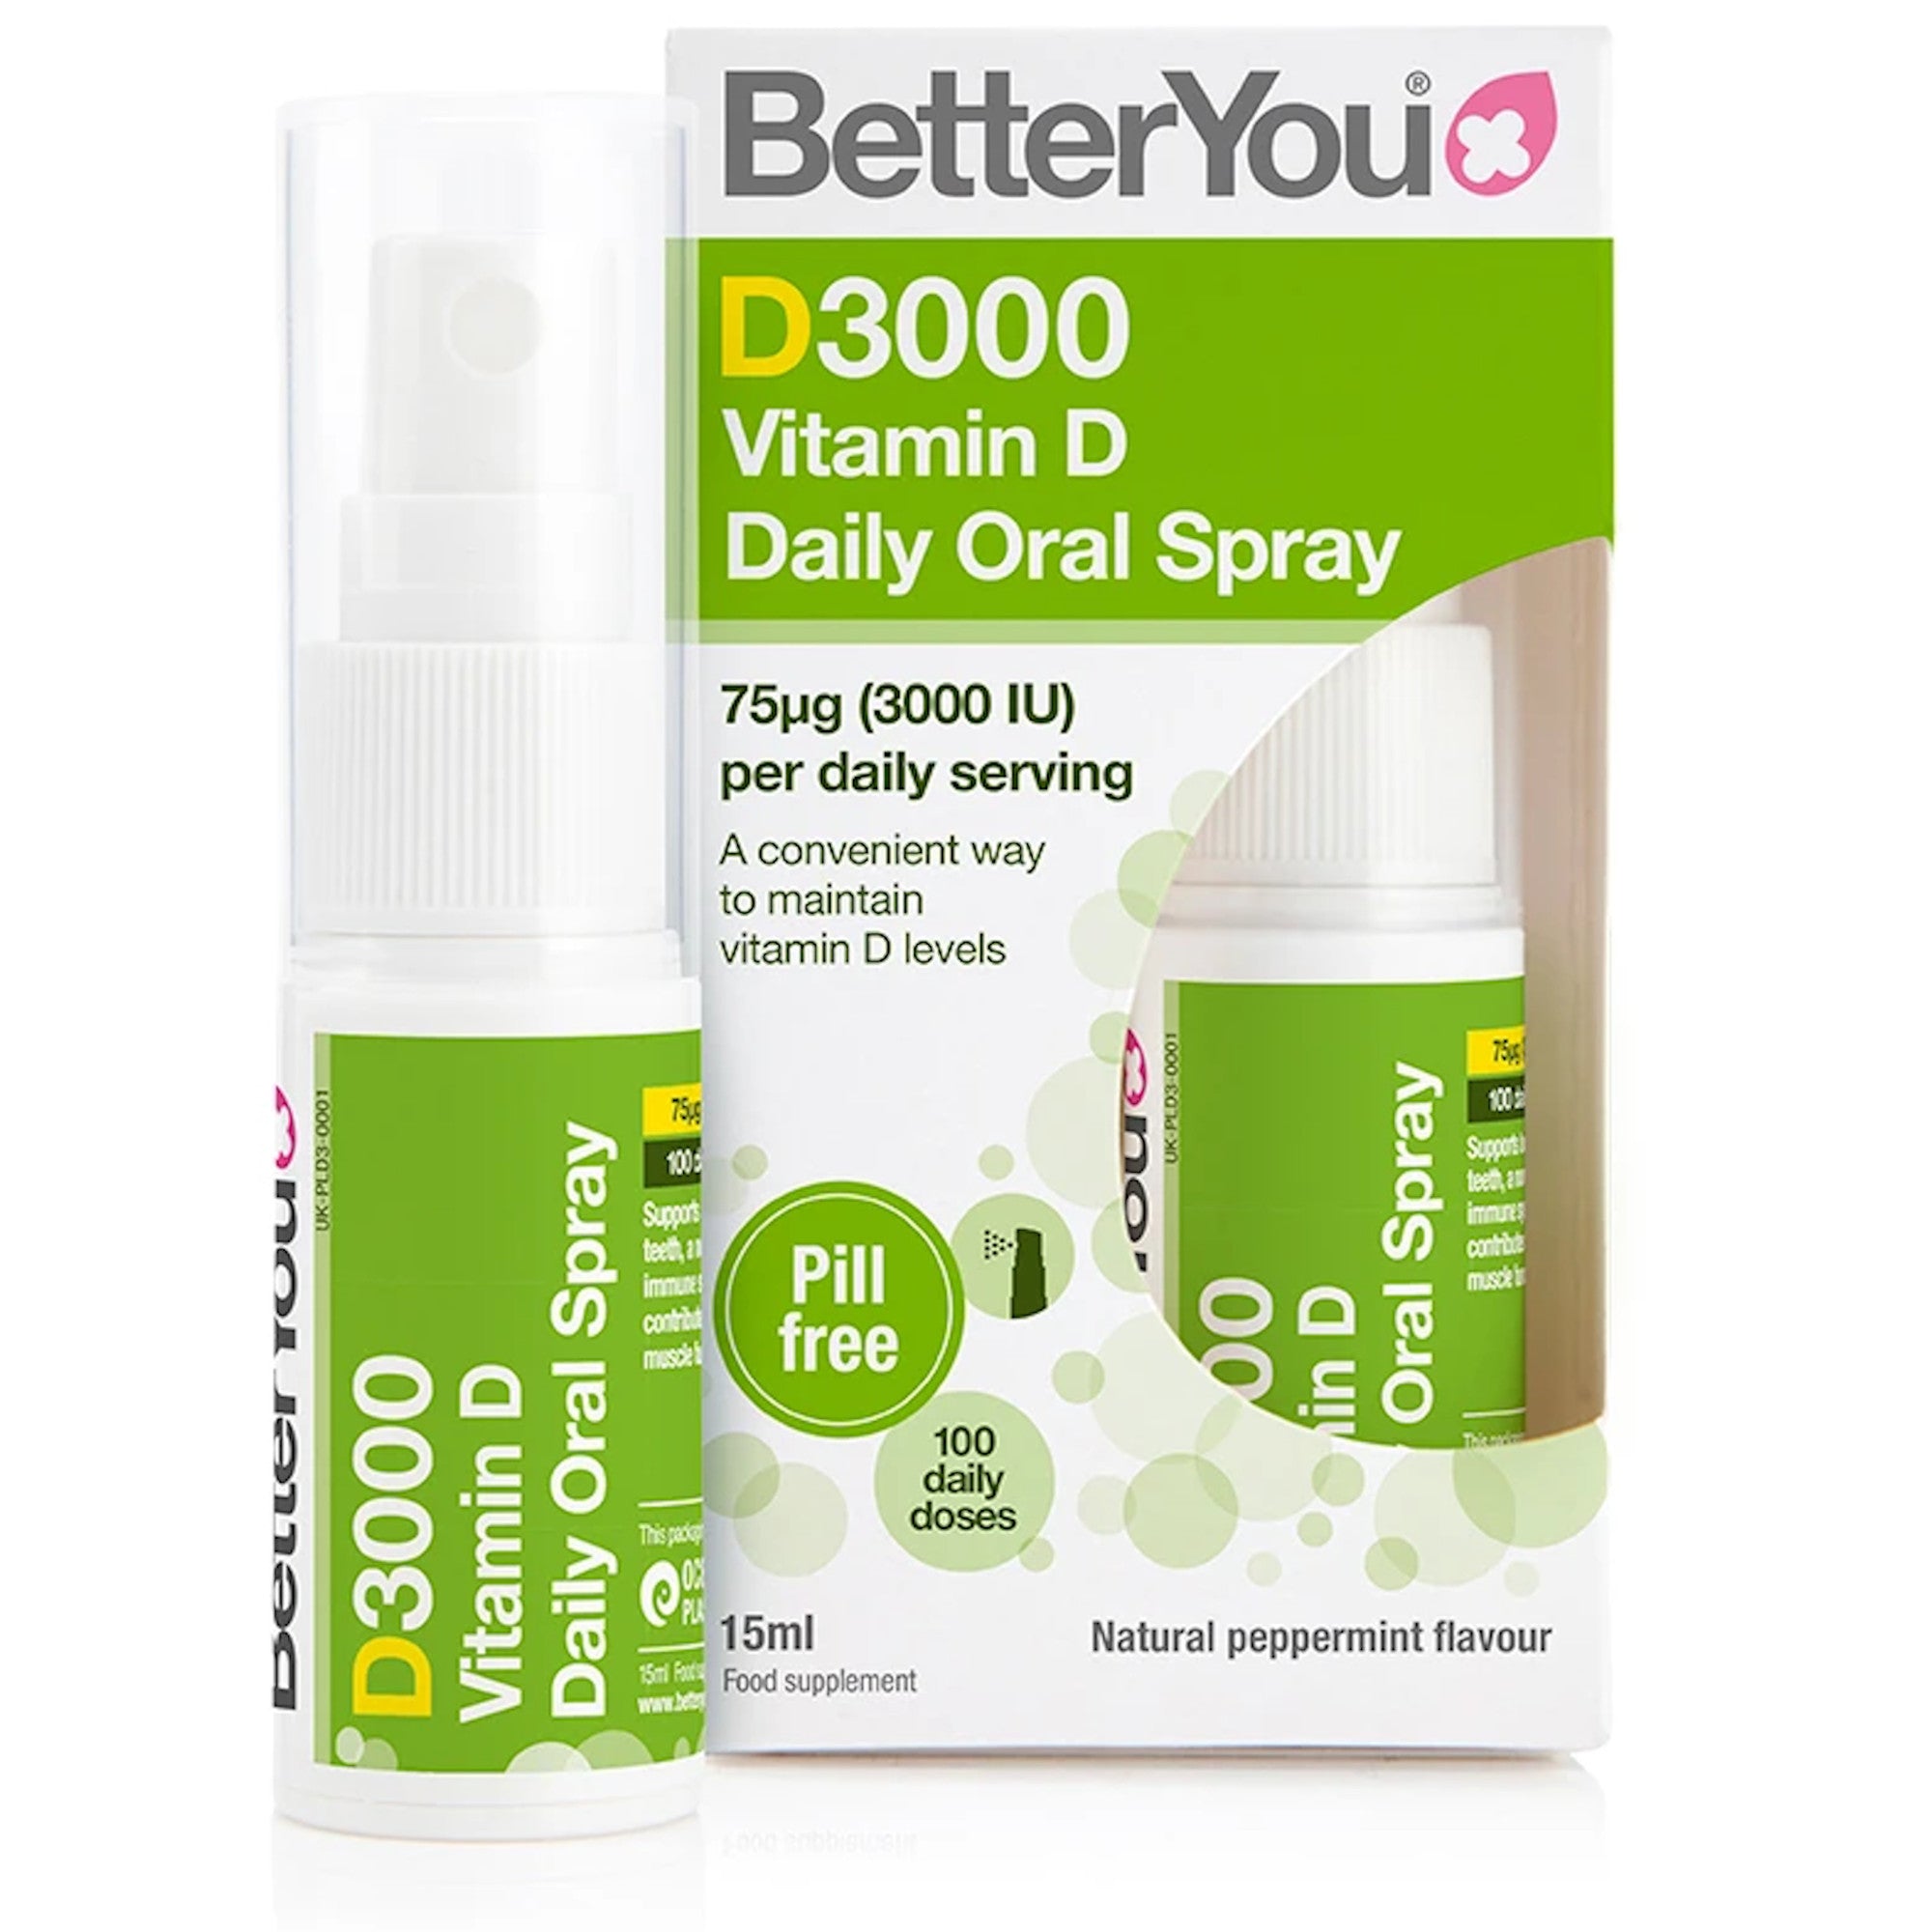 BetterYou D3000 Vitamin D Oral Spray - 15ml